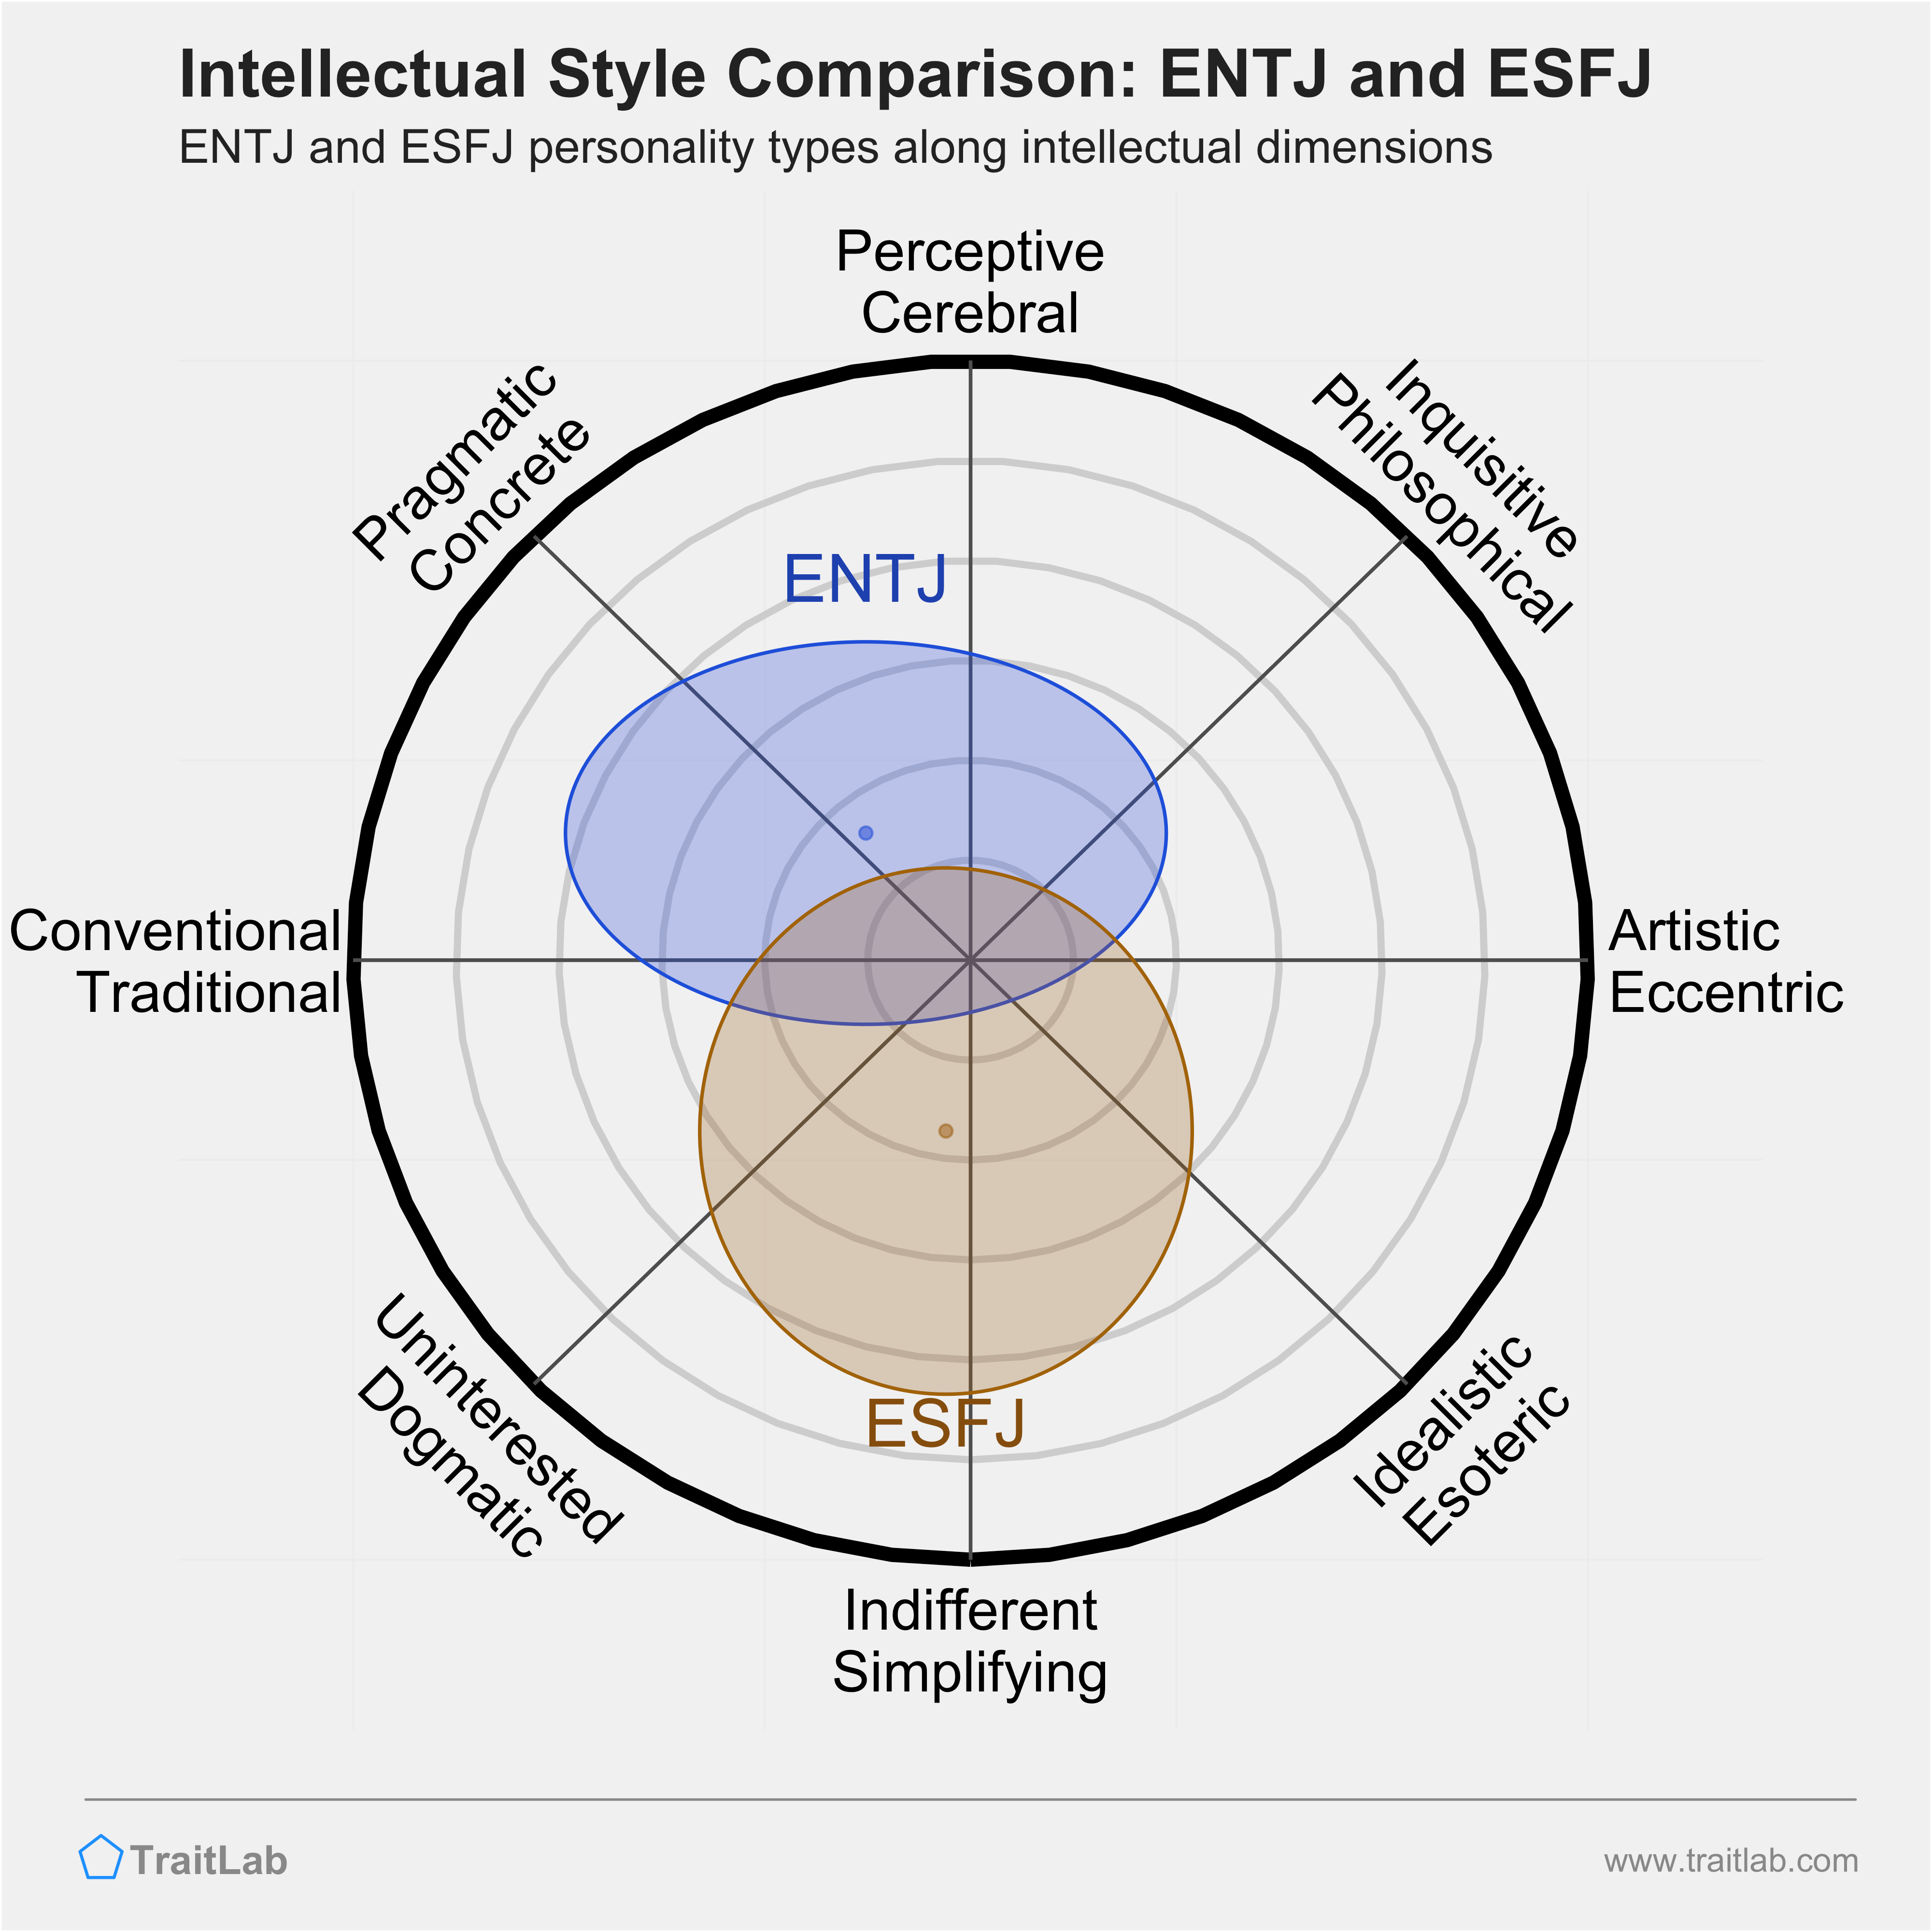 ENTJ and ESFJ comparison across intellectual dimensions